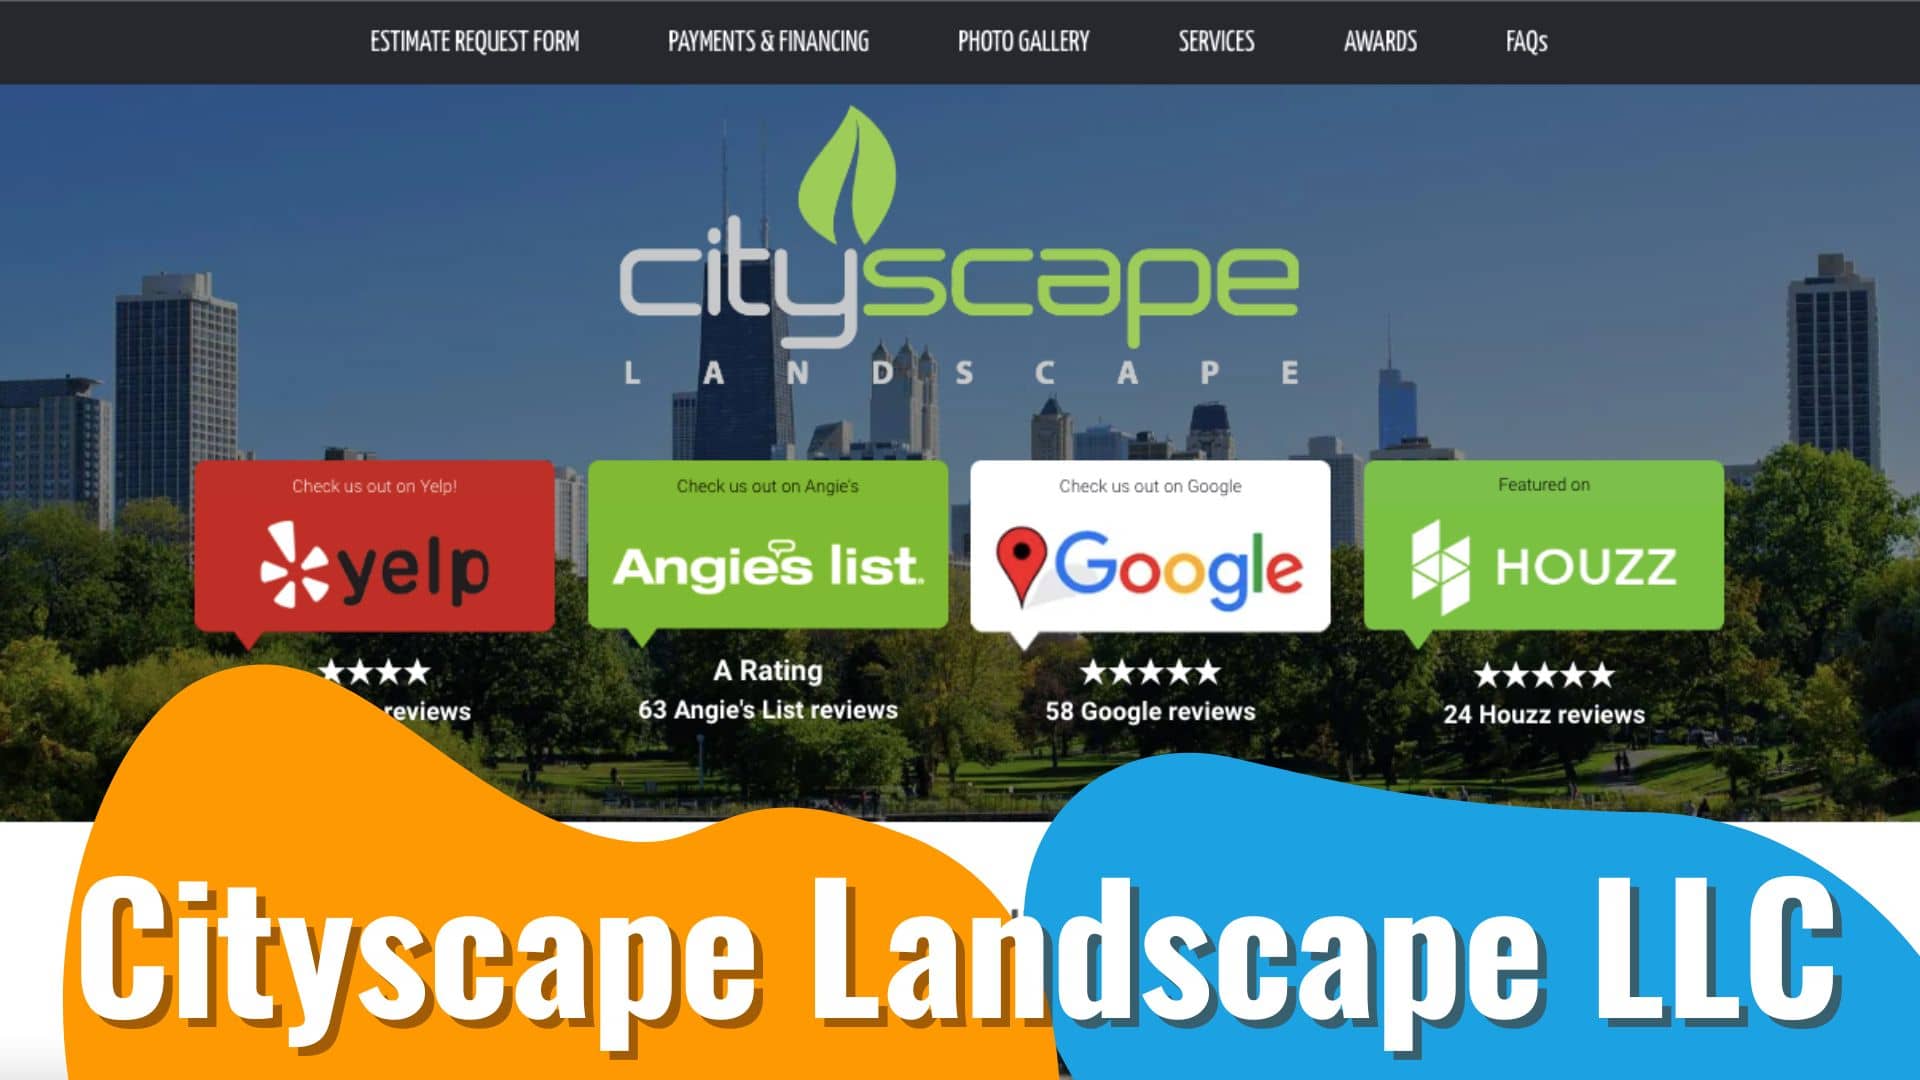 Cityscape Landscape Chicago